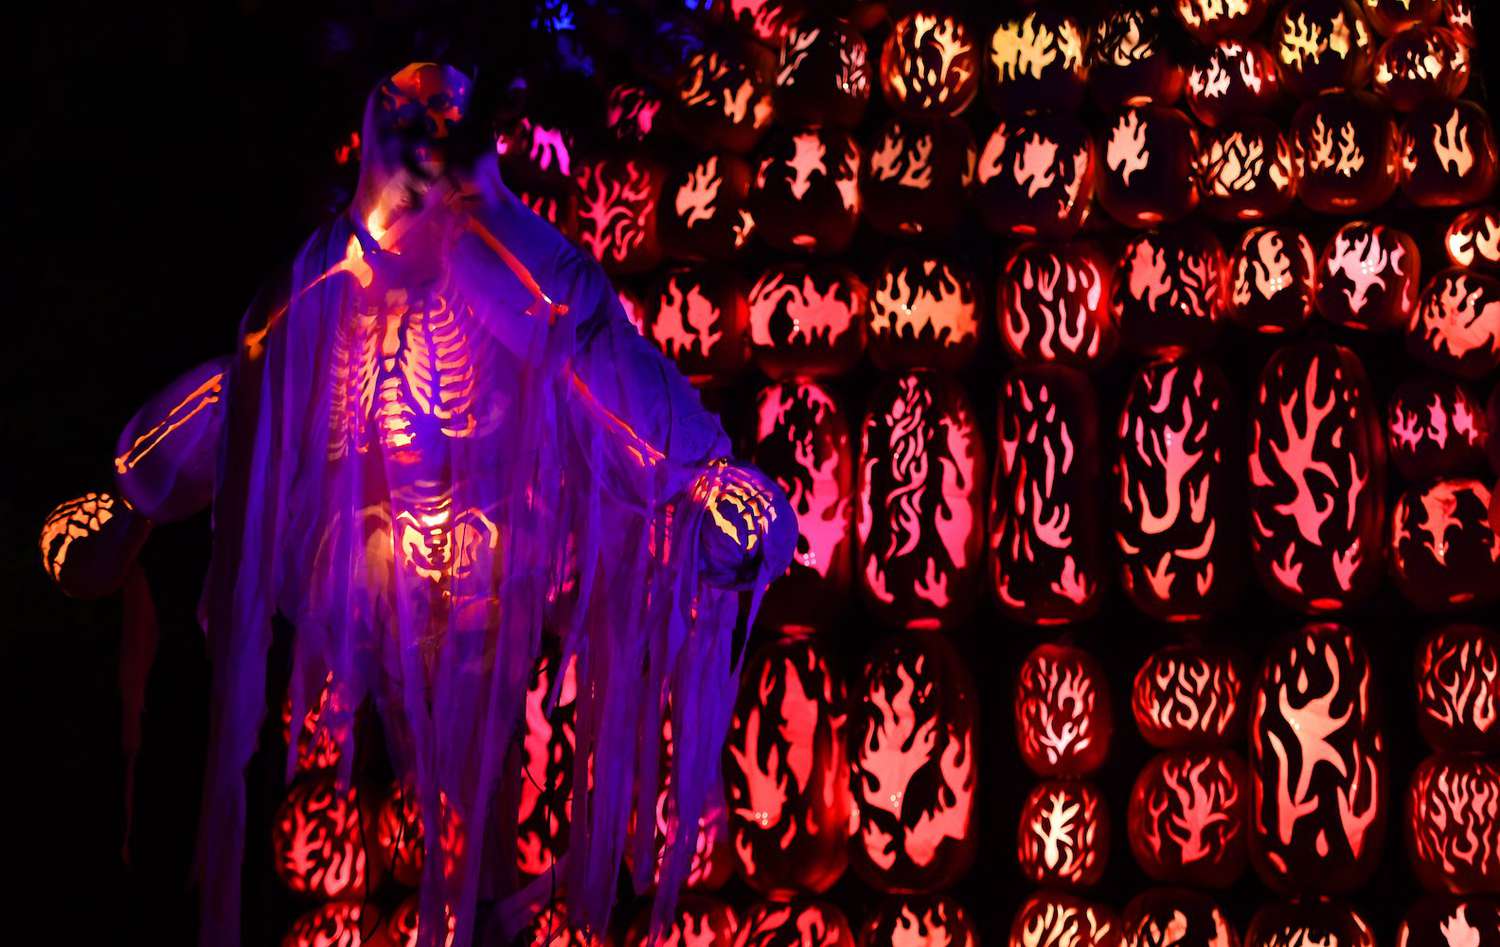 Illuminated pumpkins are on display during the Great Jack O'Lantern Blaze at Van Cortlandt Manor in Croton-on-Hudson, New York